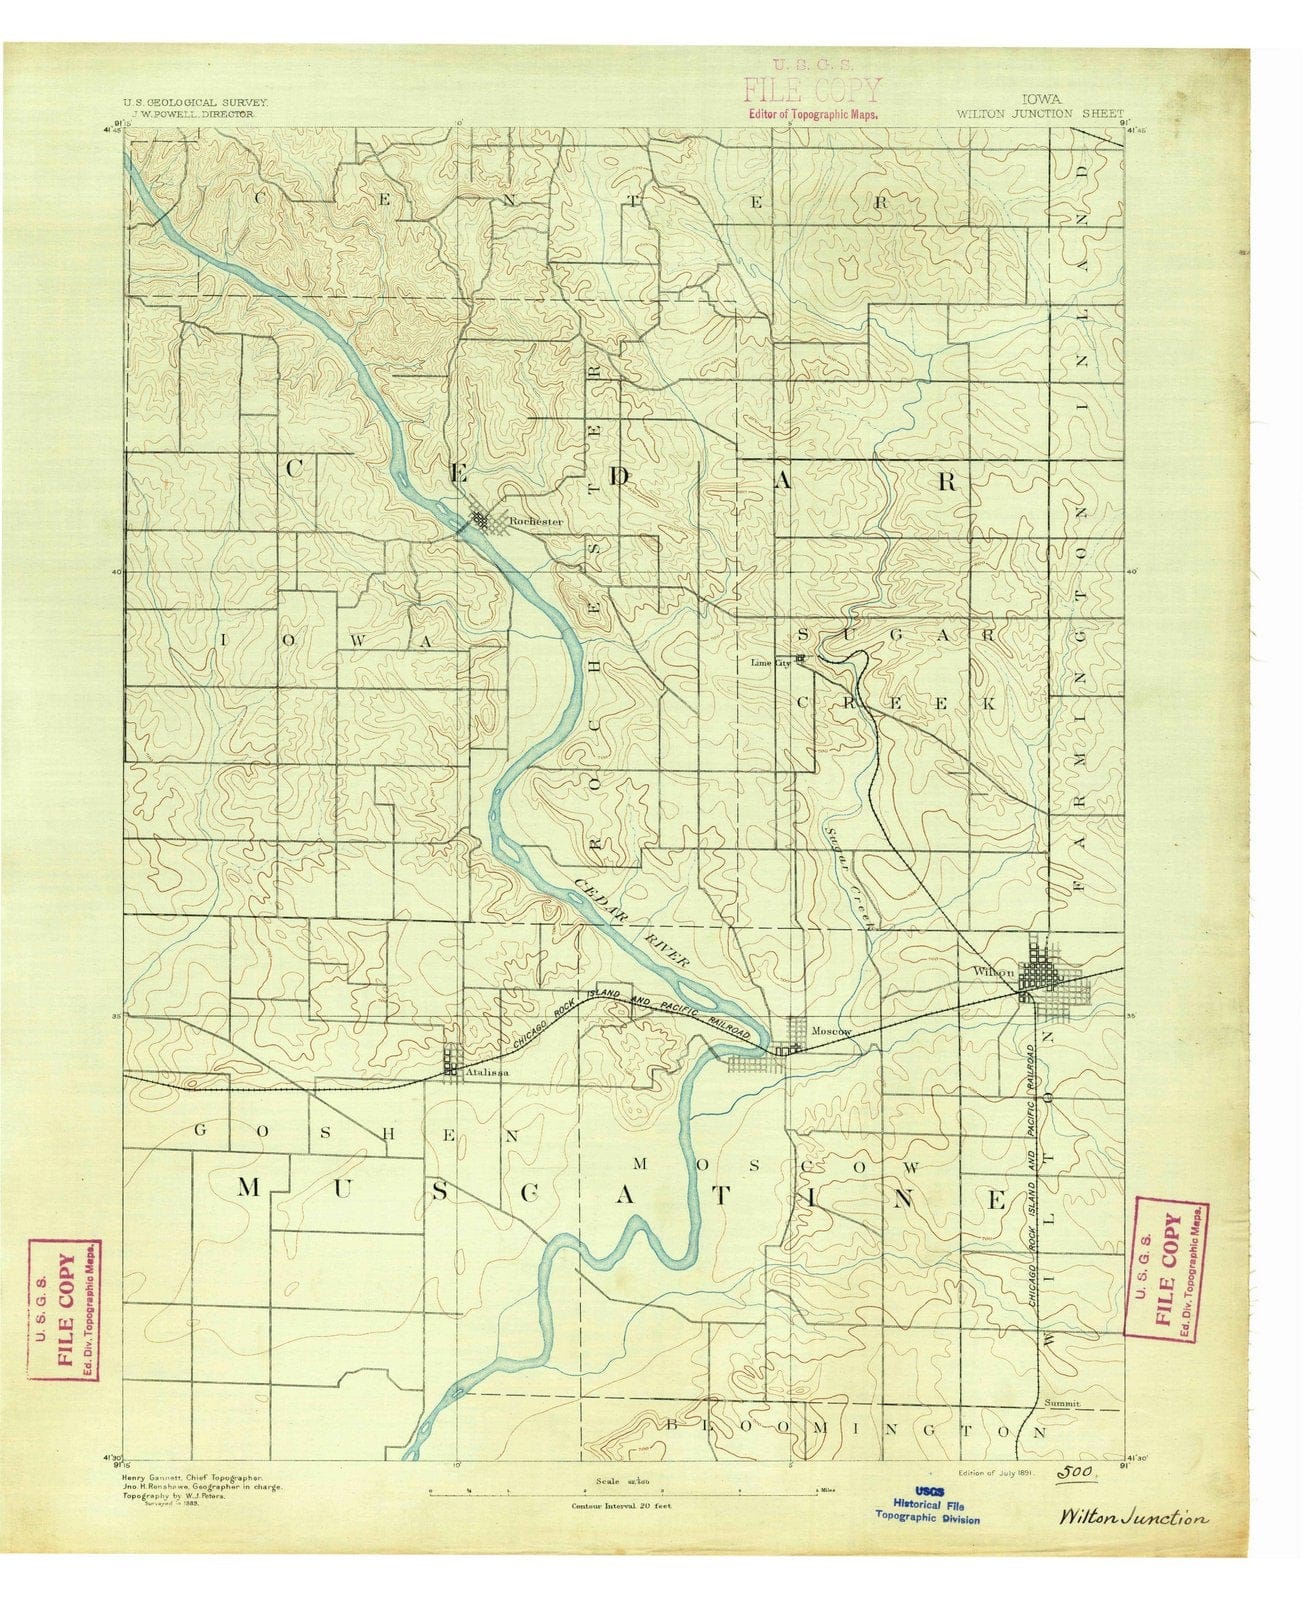 1891 Wilton Junction, IA - Iowa - USGS Topographic Map